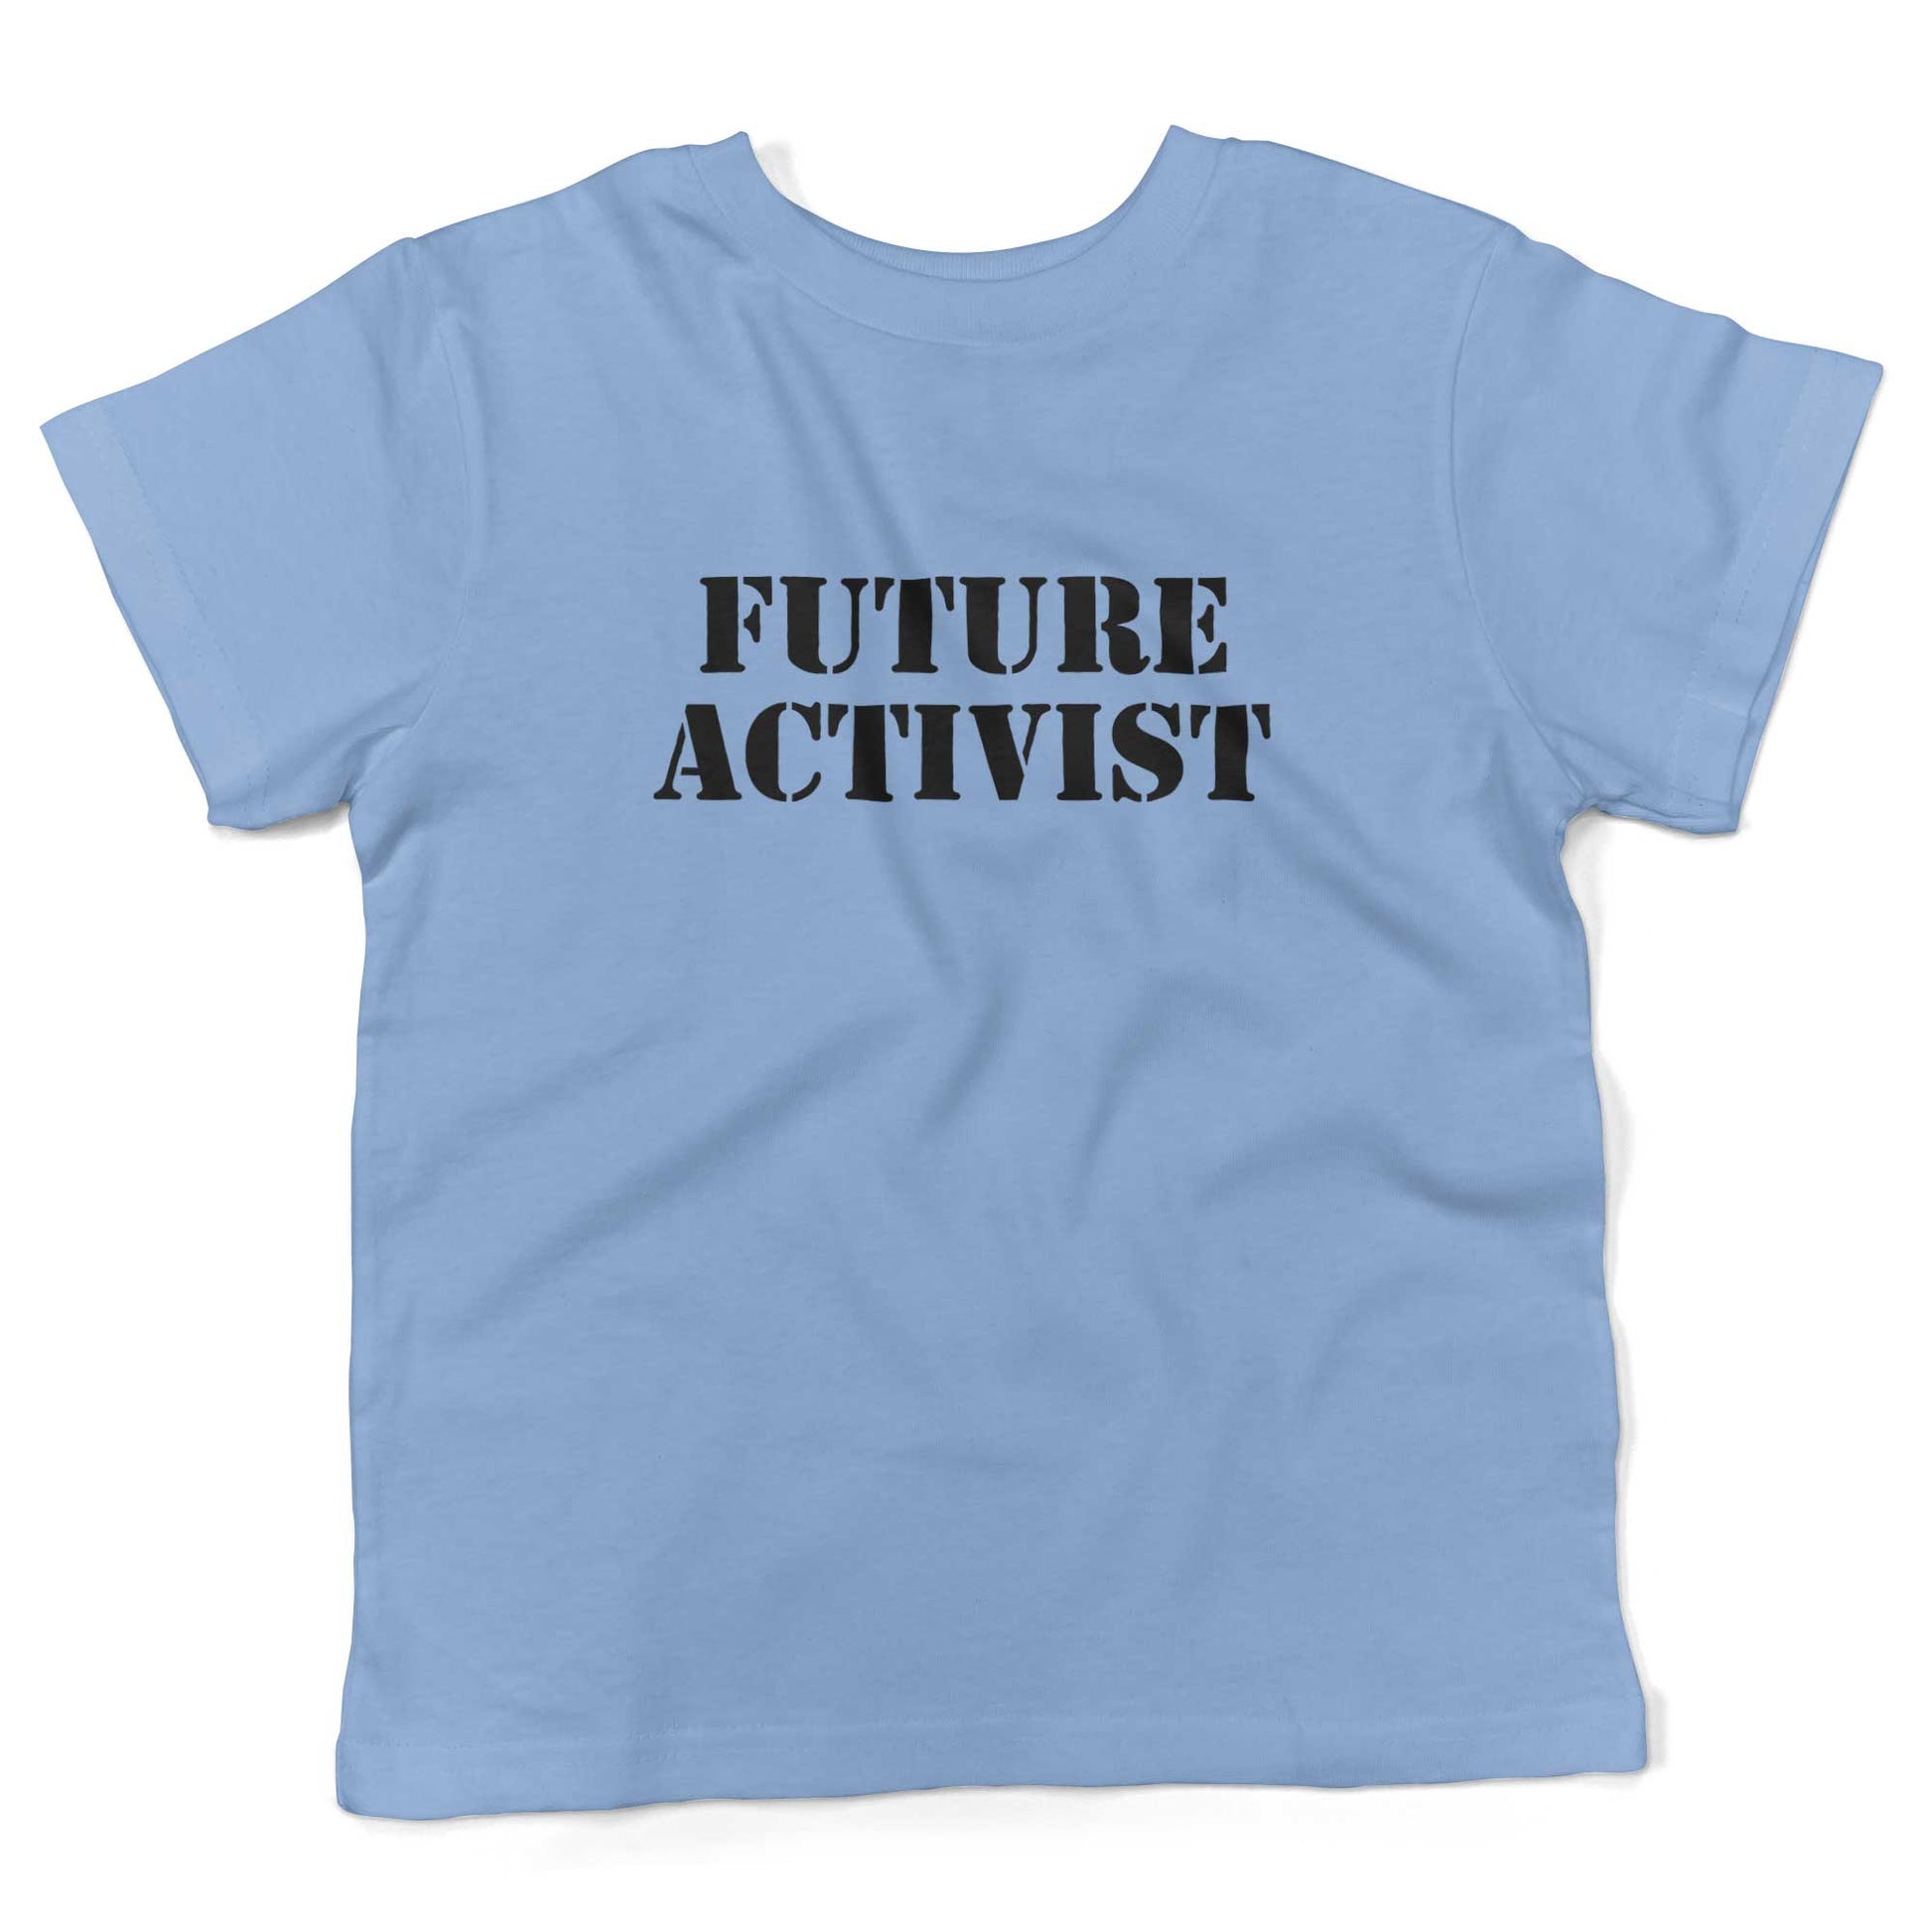 Future Activist Toddler Shirt-Organic Baby Blue-2T